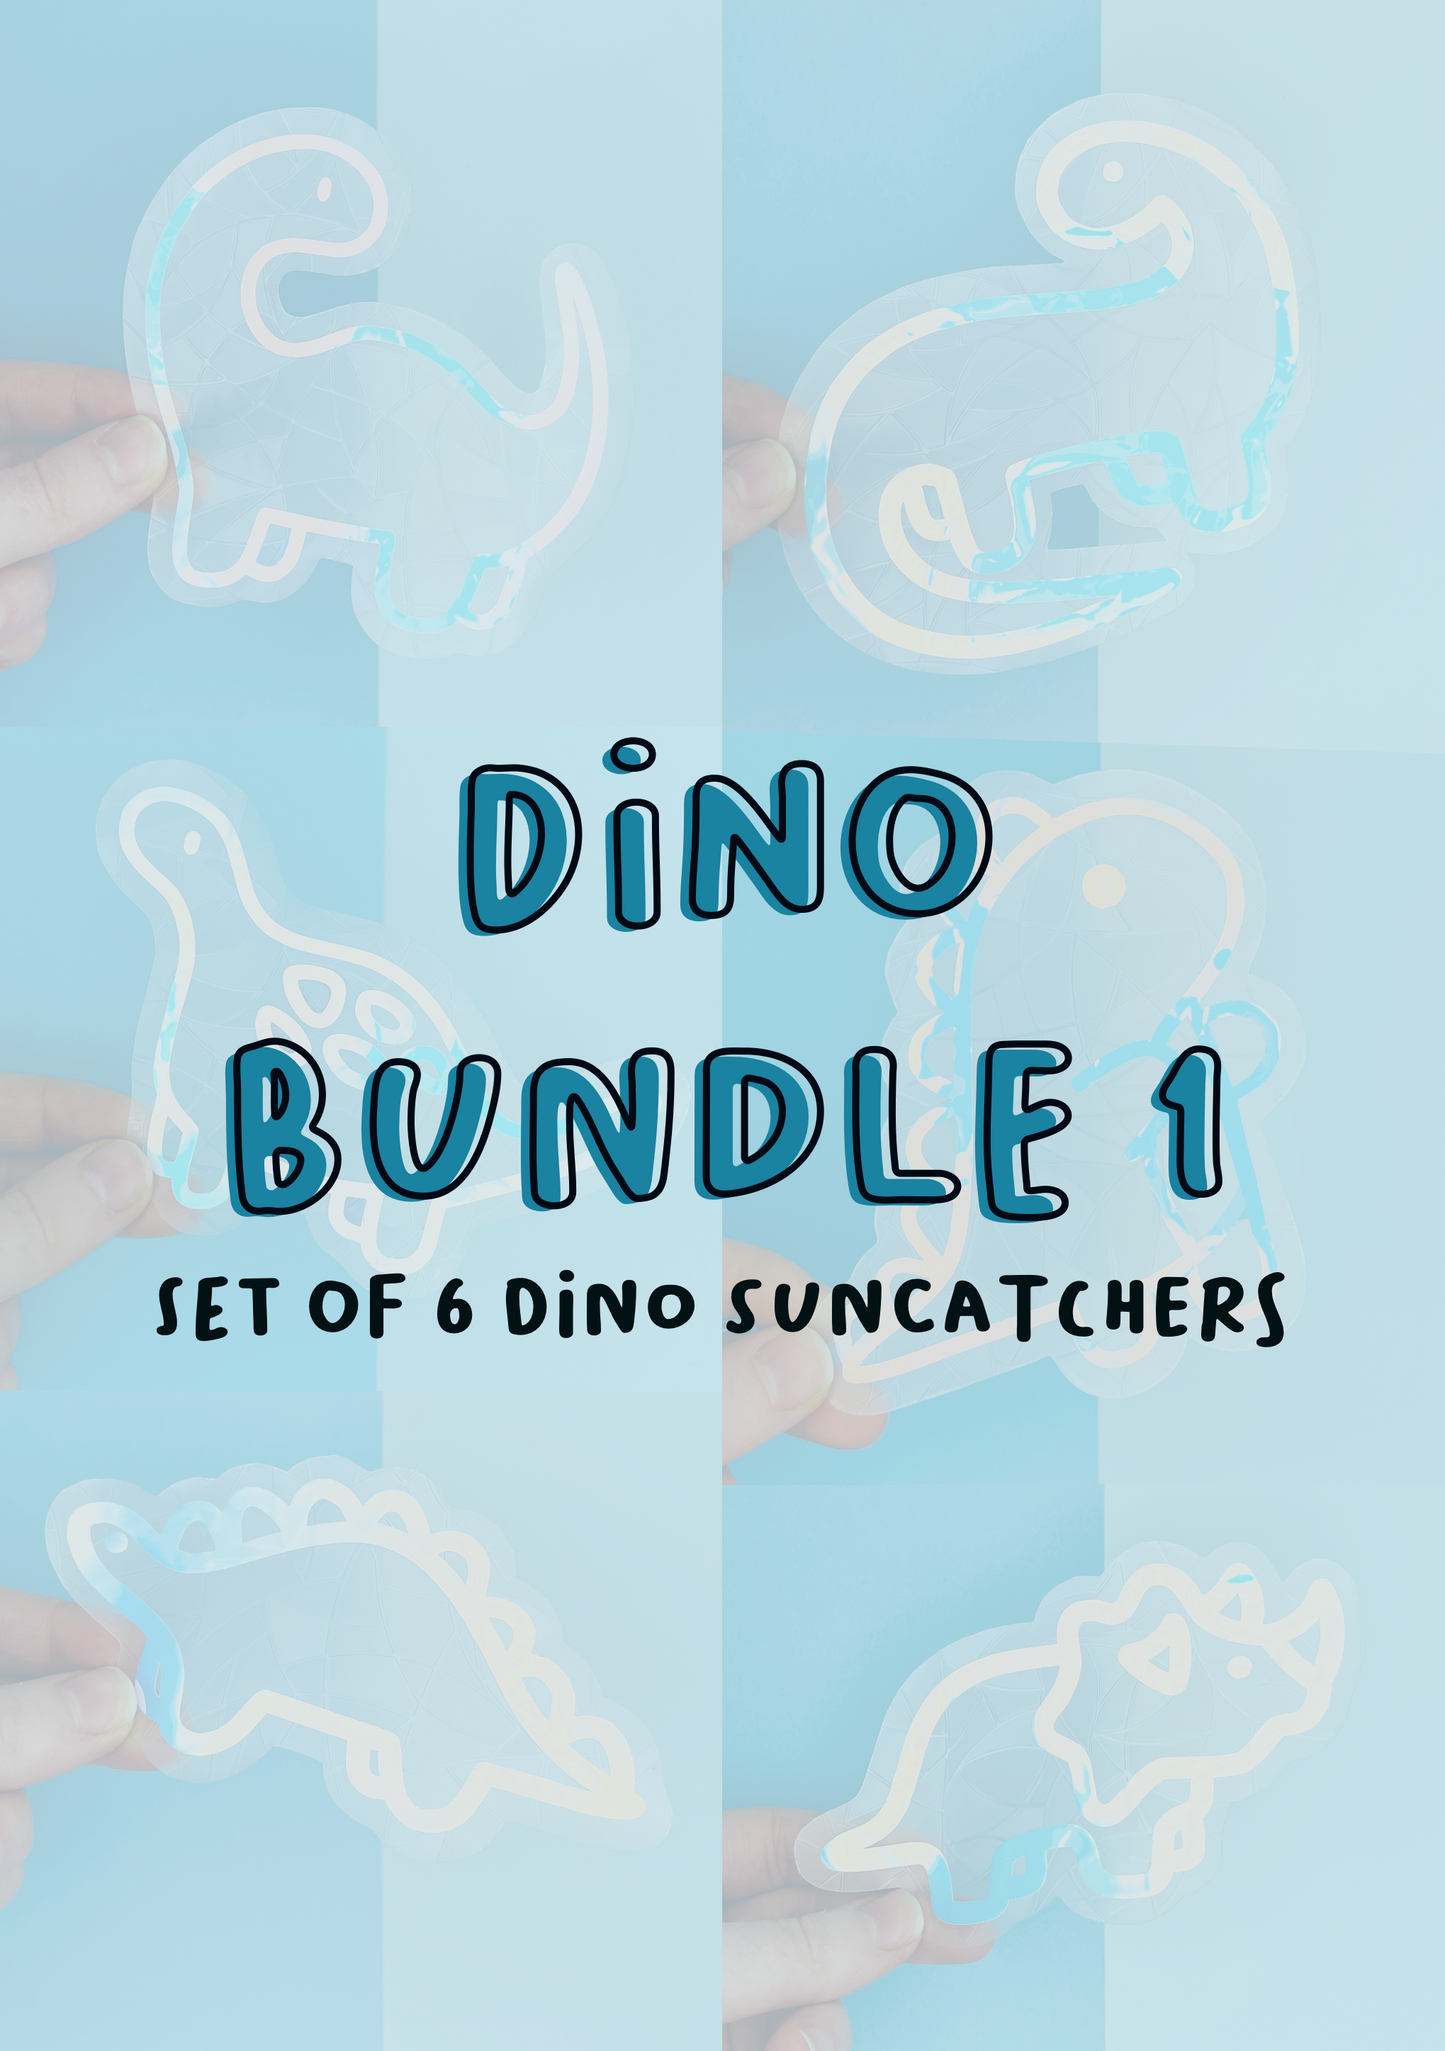 Dino Suncatchers Bundle 1